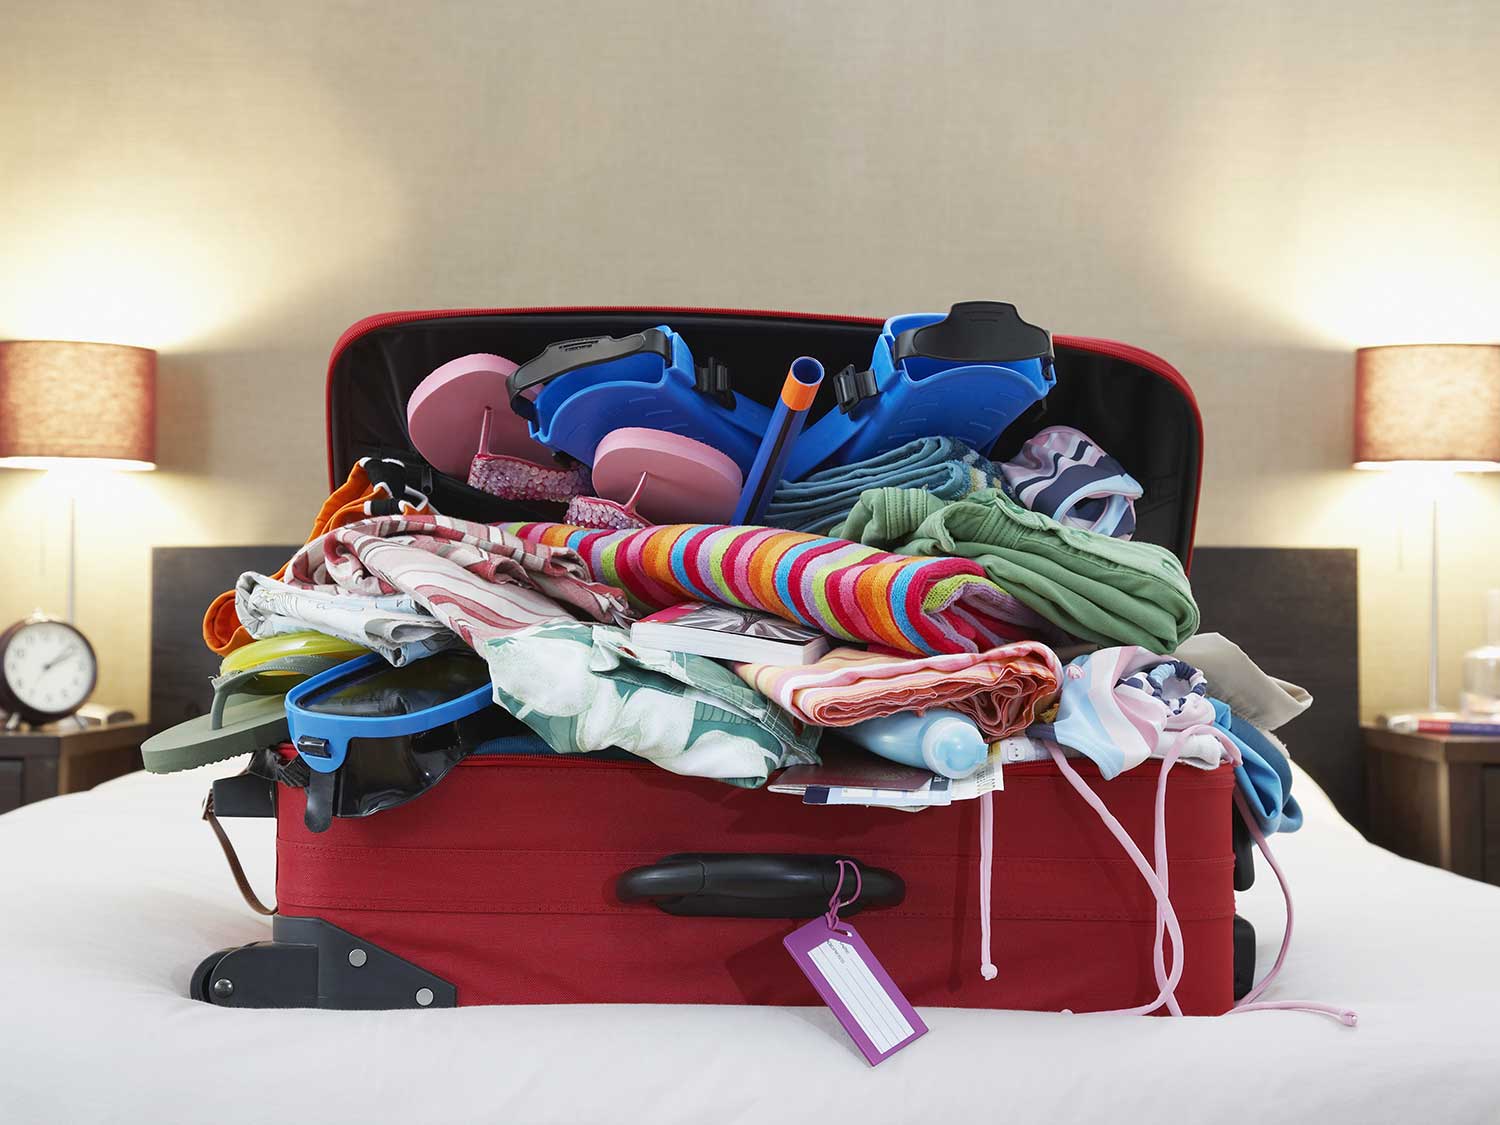 Messy, overstuffed luggage